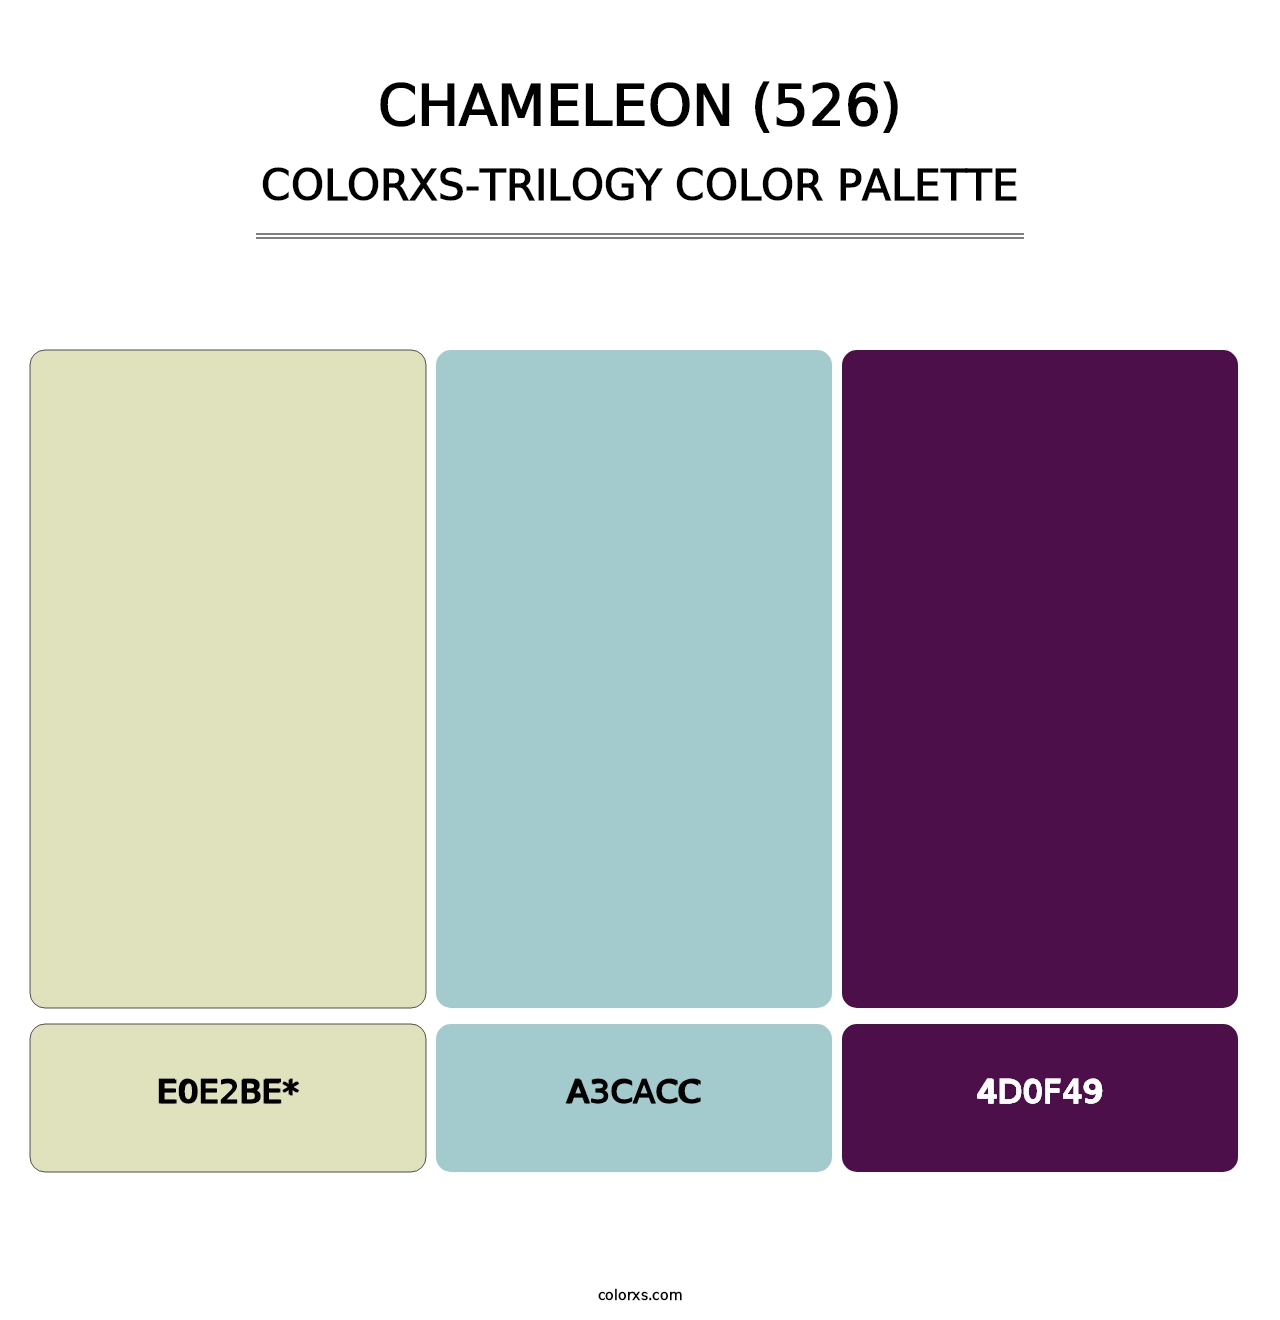 Chameleon (526) - Colorxs Trilogy Palette